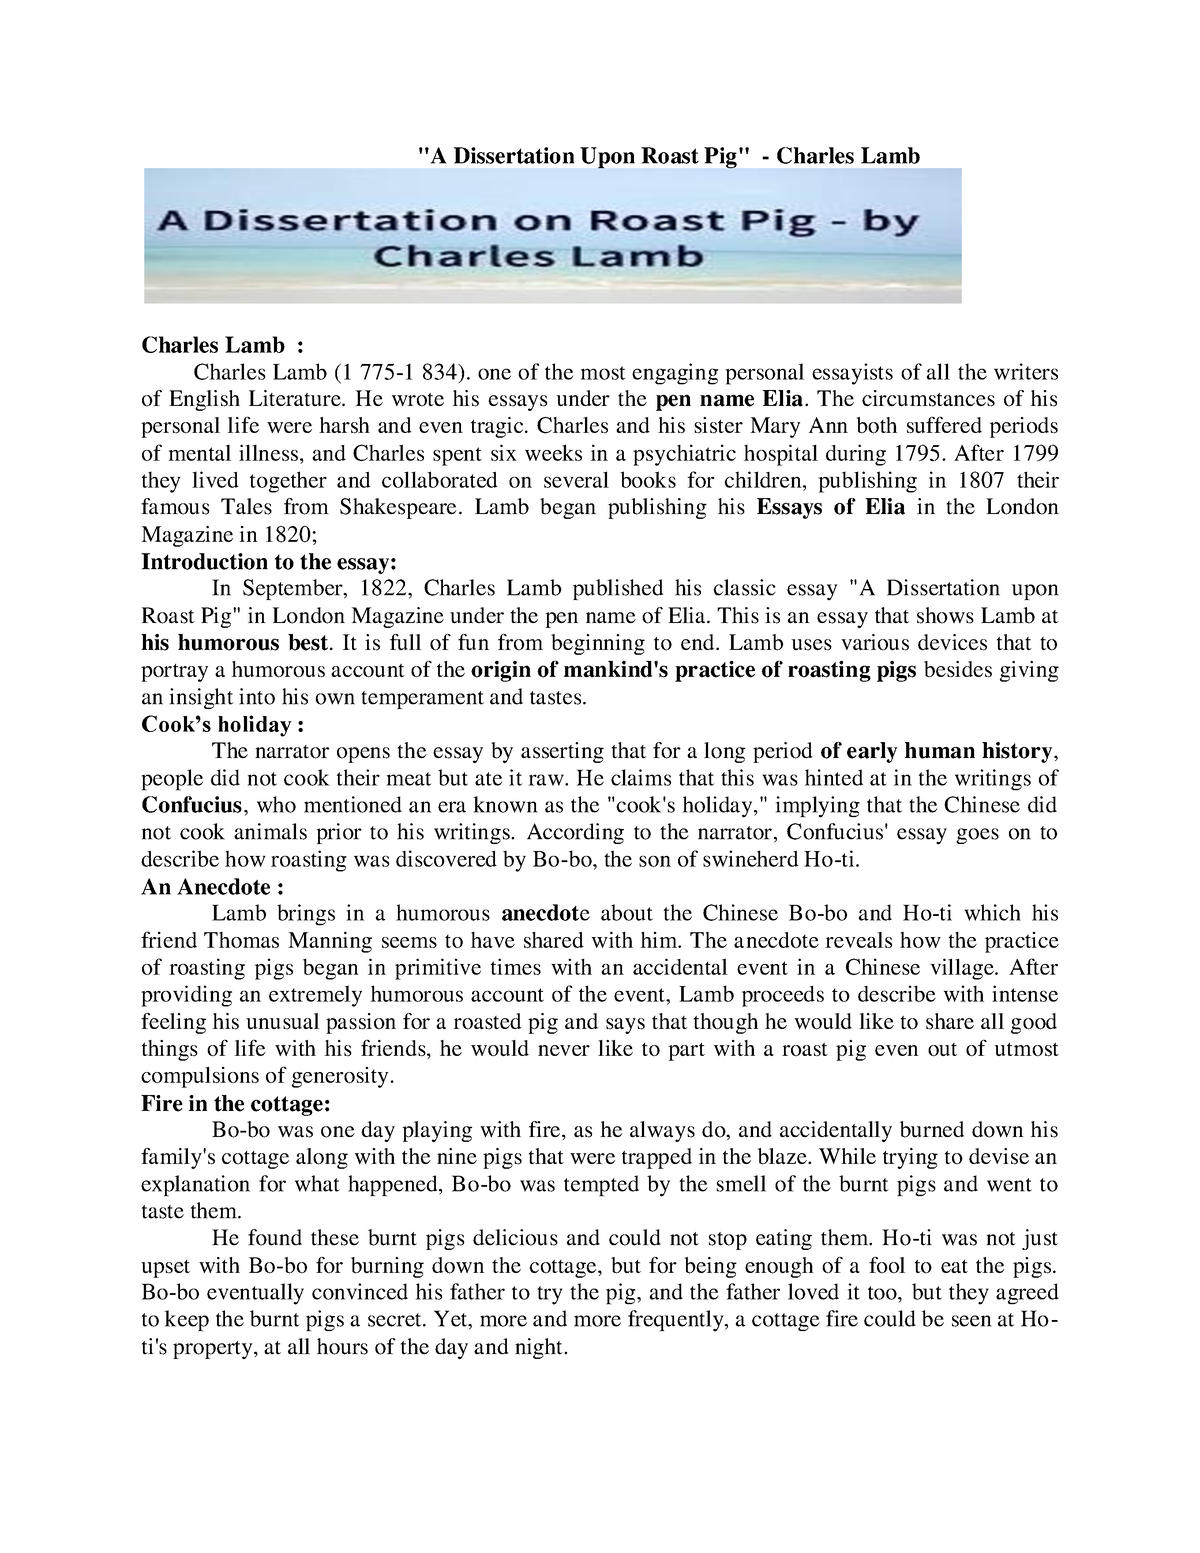 a dissertation on roast pig